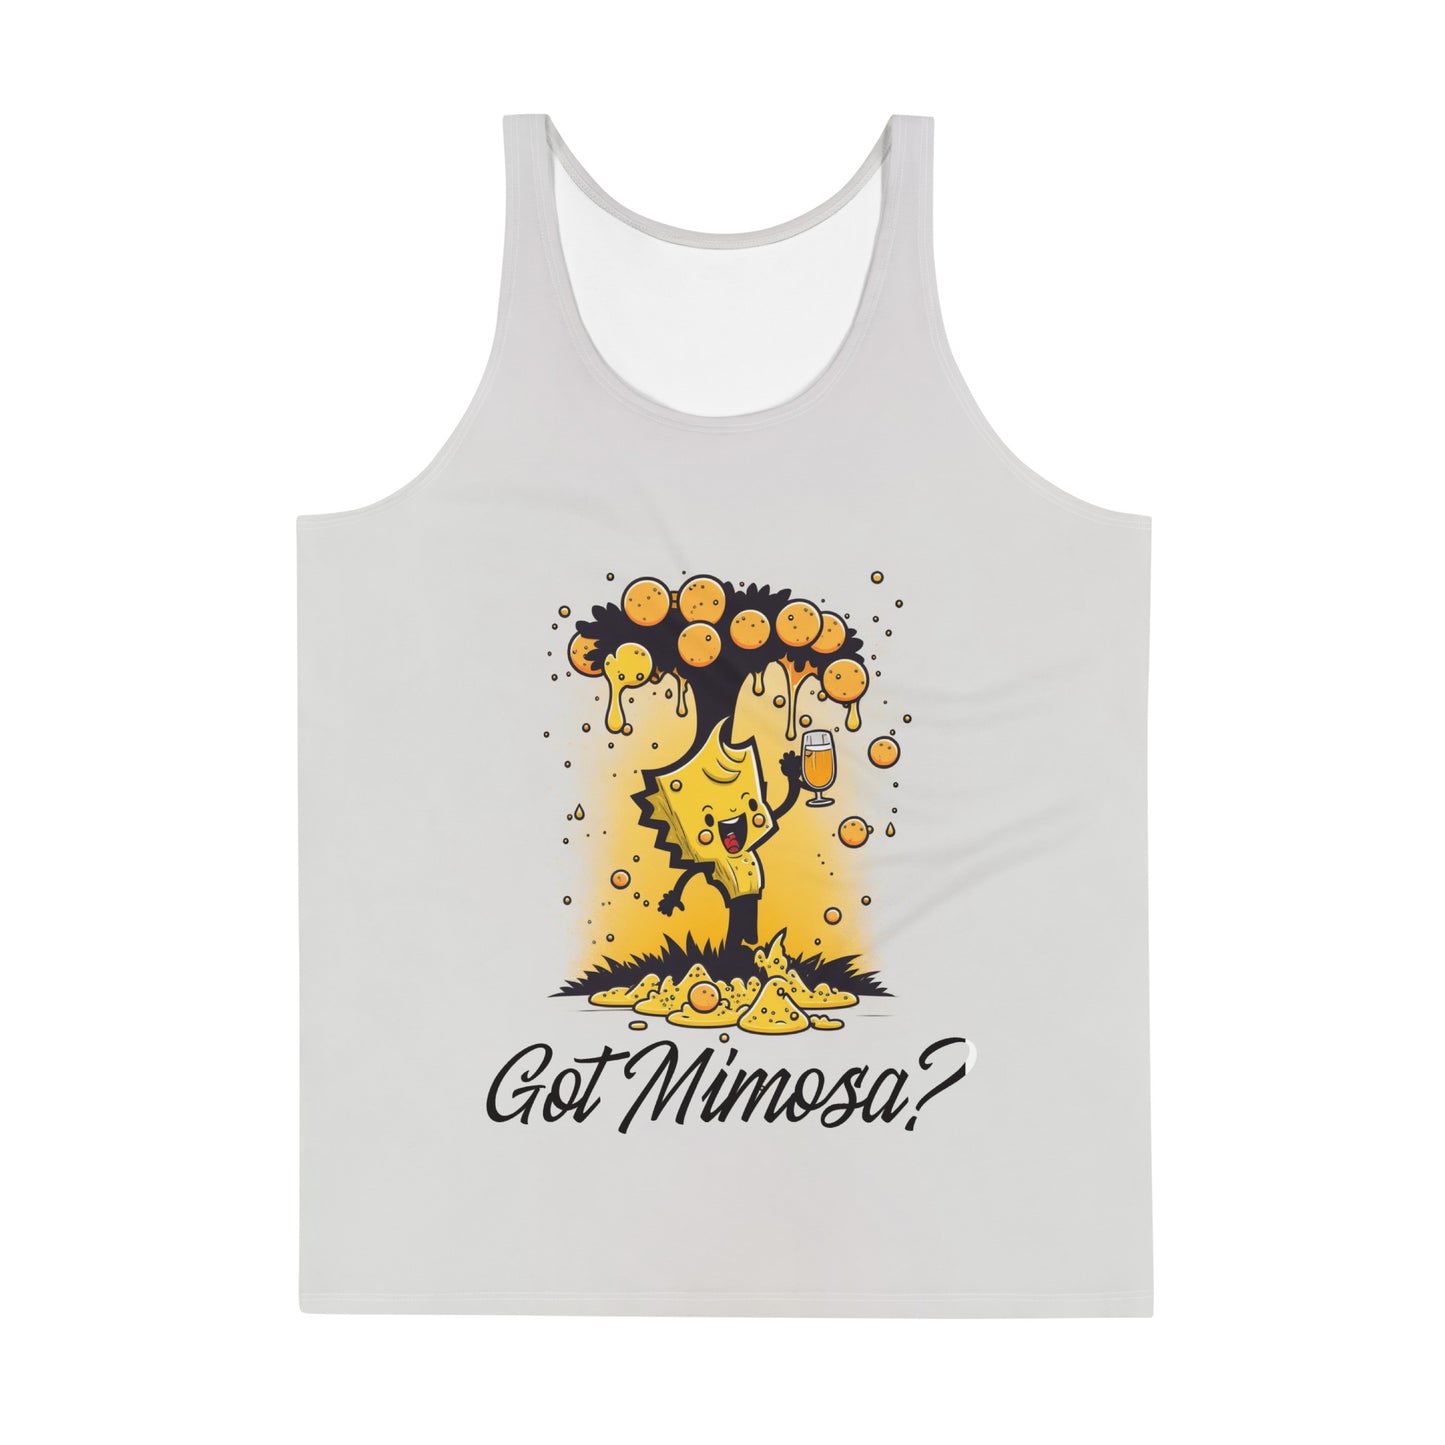 Got Mimosa? - Unisex Tank Top